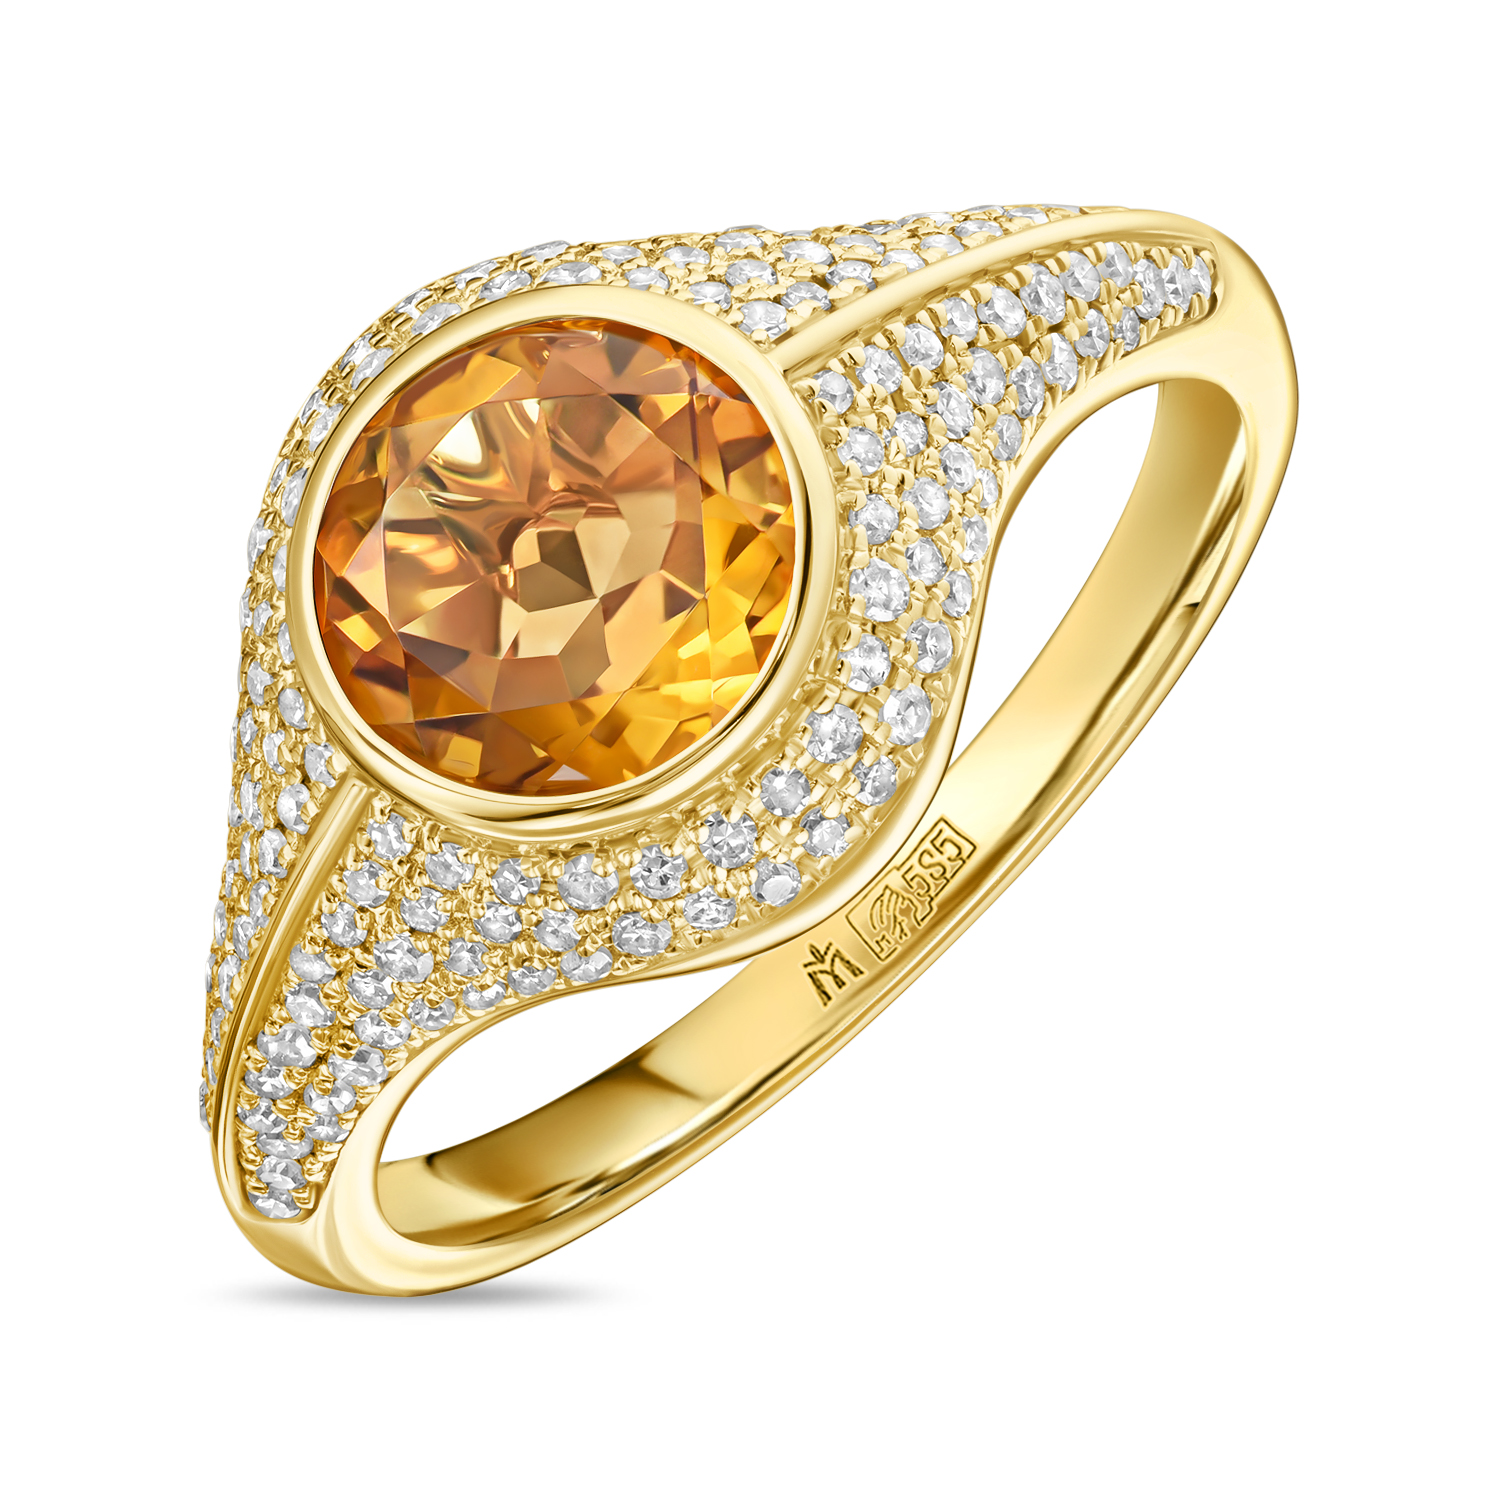 Кольца МЮЗ Кольцо с цитрином и бриллиантами кольца мюз золотое кольцо с цитрином и бриллиантами